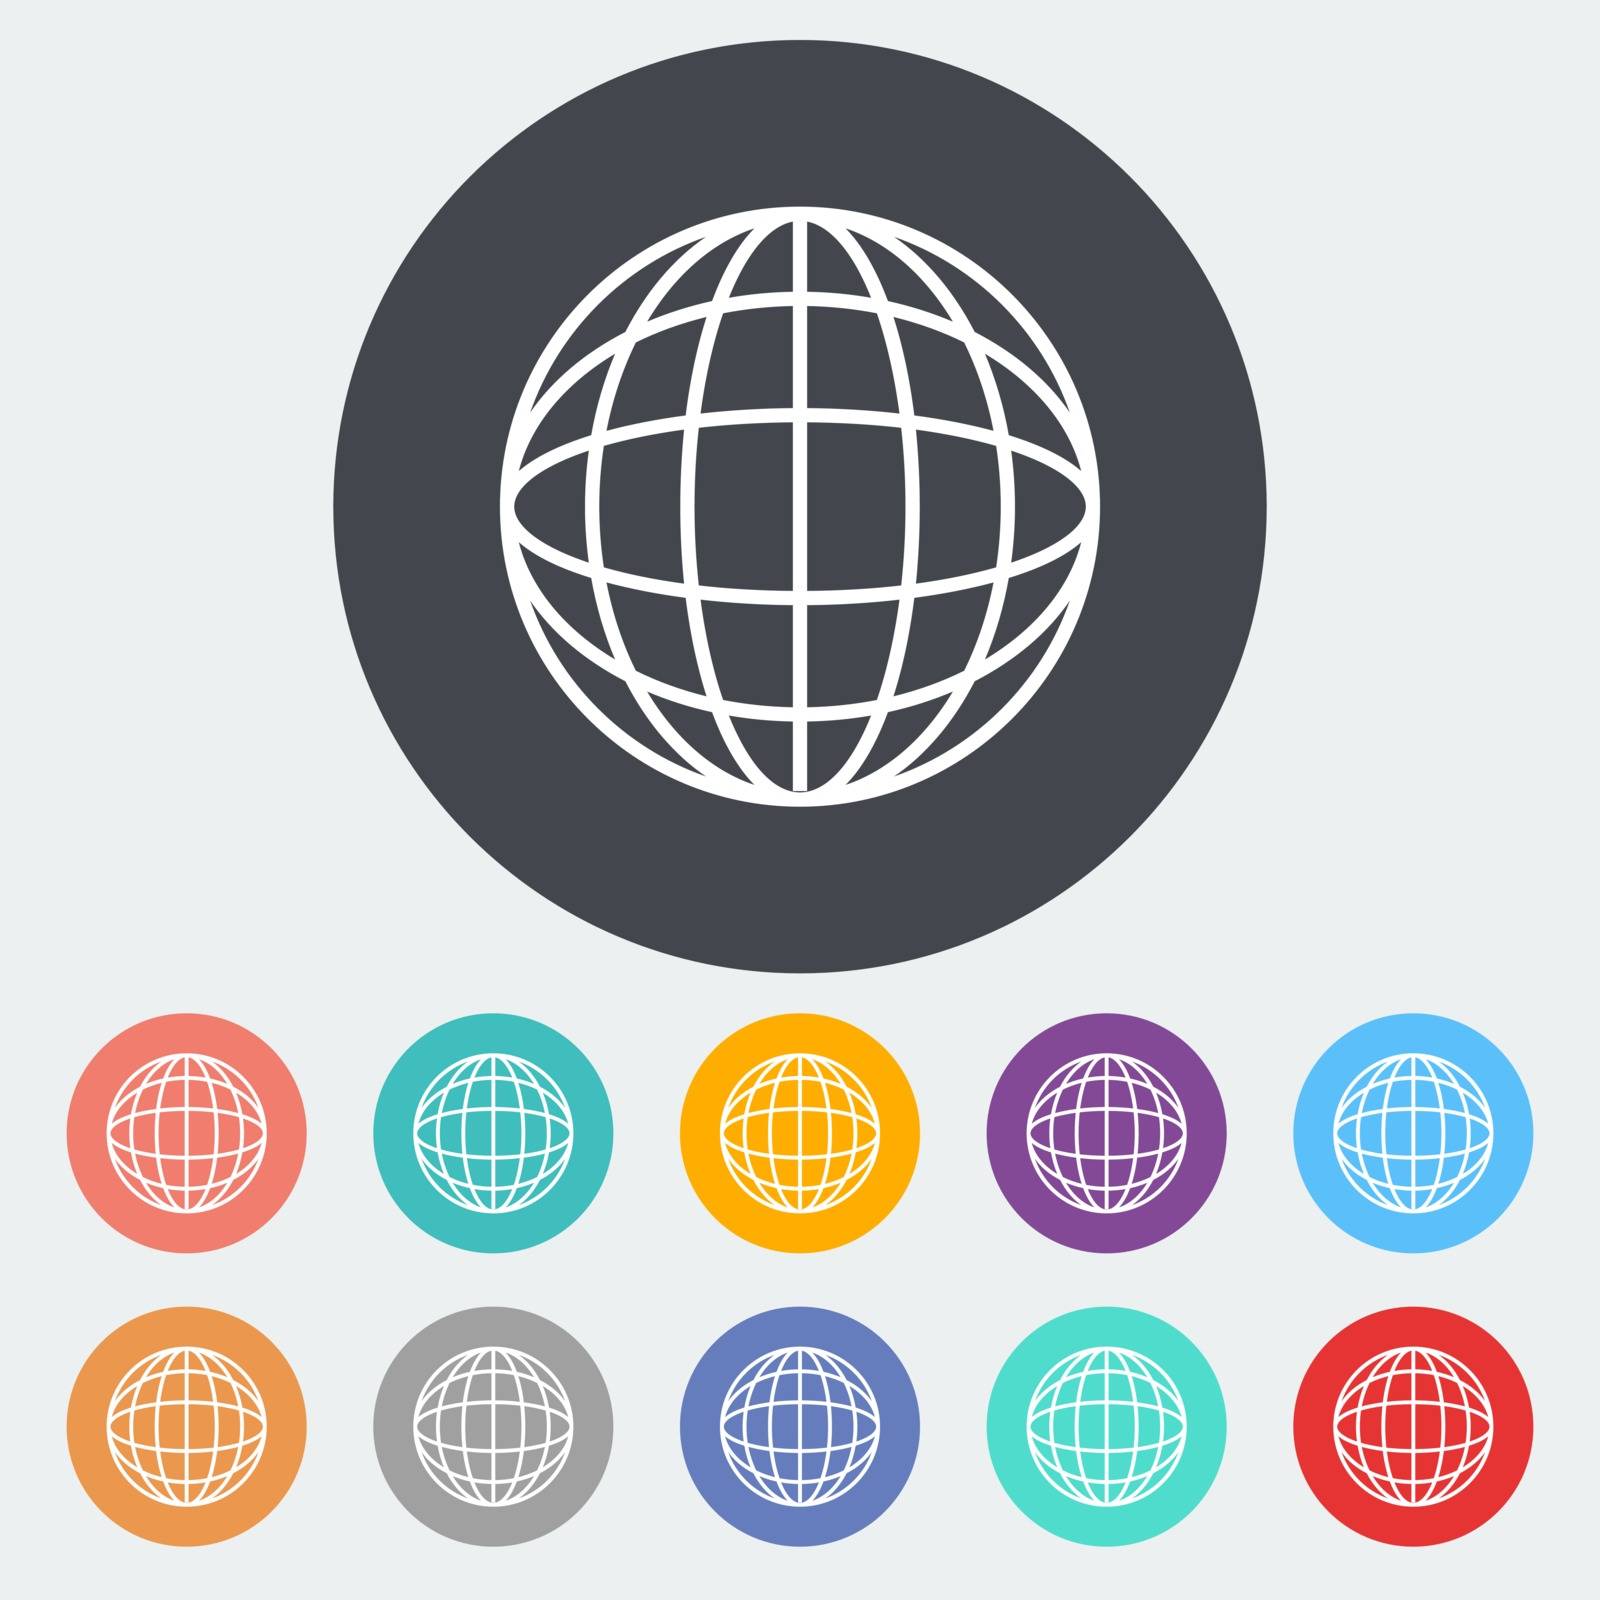 Simple World globe. Single flat icon on the circle. Vector illustration.